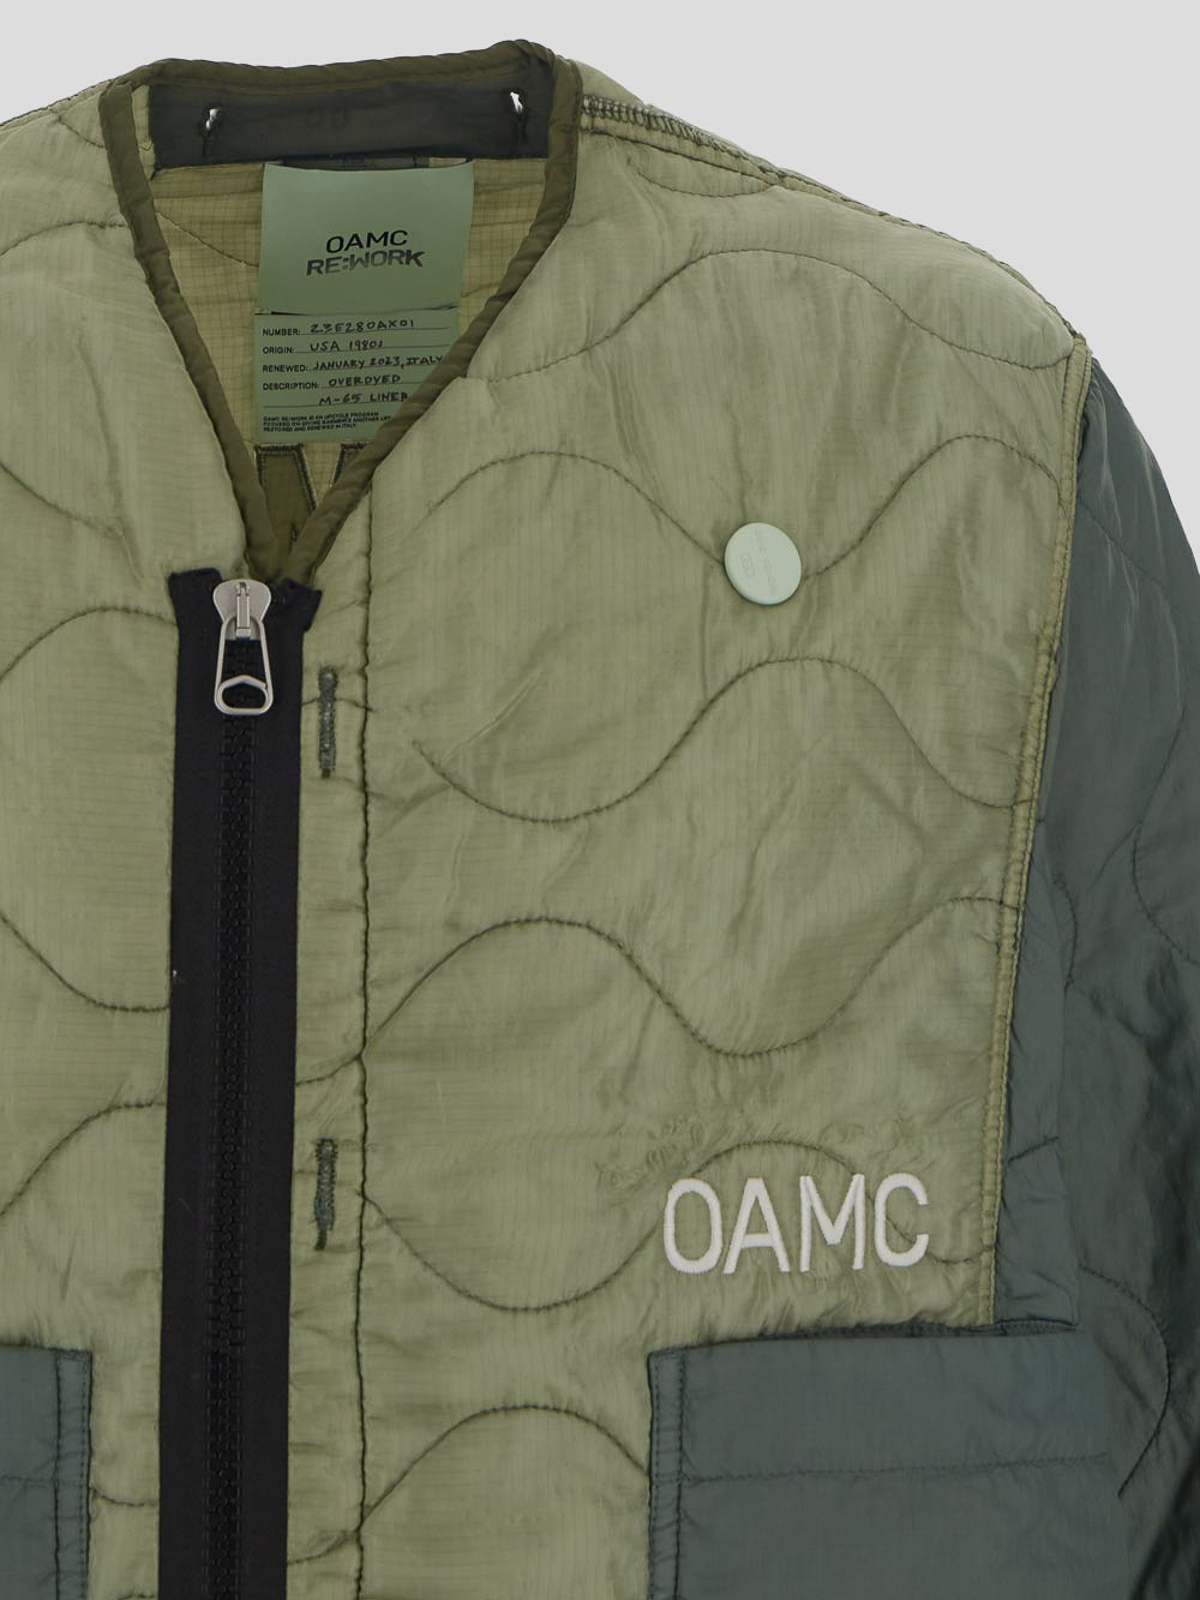 Casual jackets Oamc - Oamc jacket - 23E28OAX01 | thebs.com [ikrix.com]